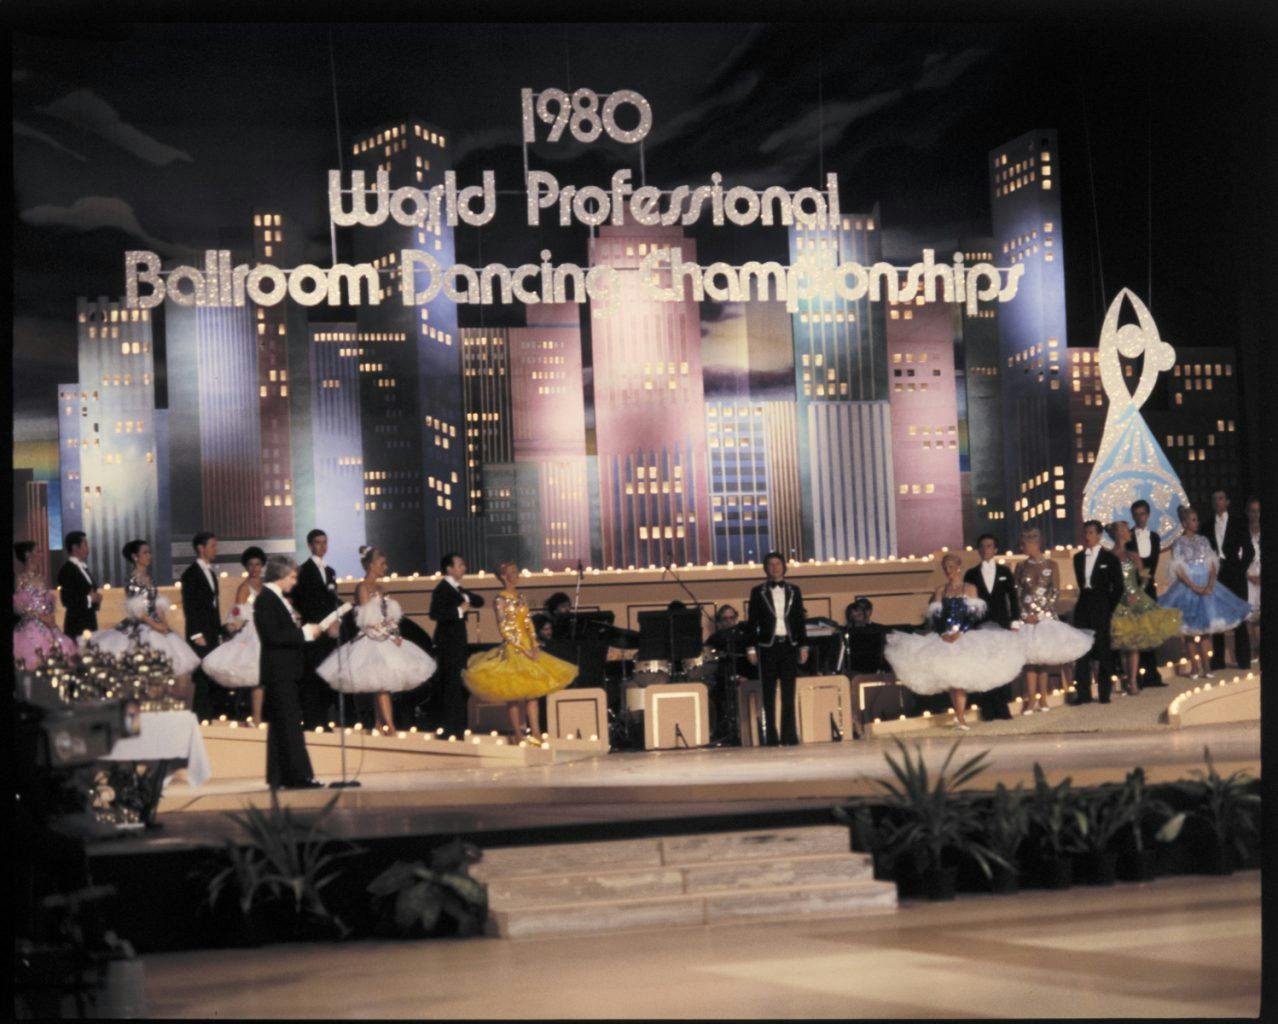 Perth Entertainment Centre World Ballroom Dancing Championships 1980